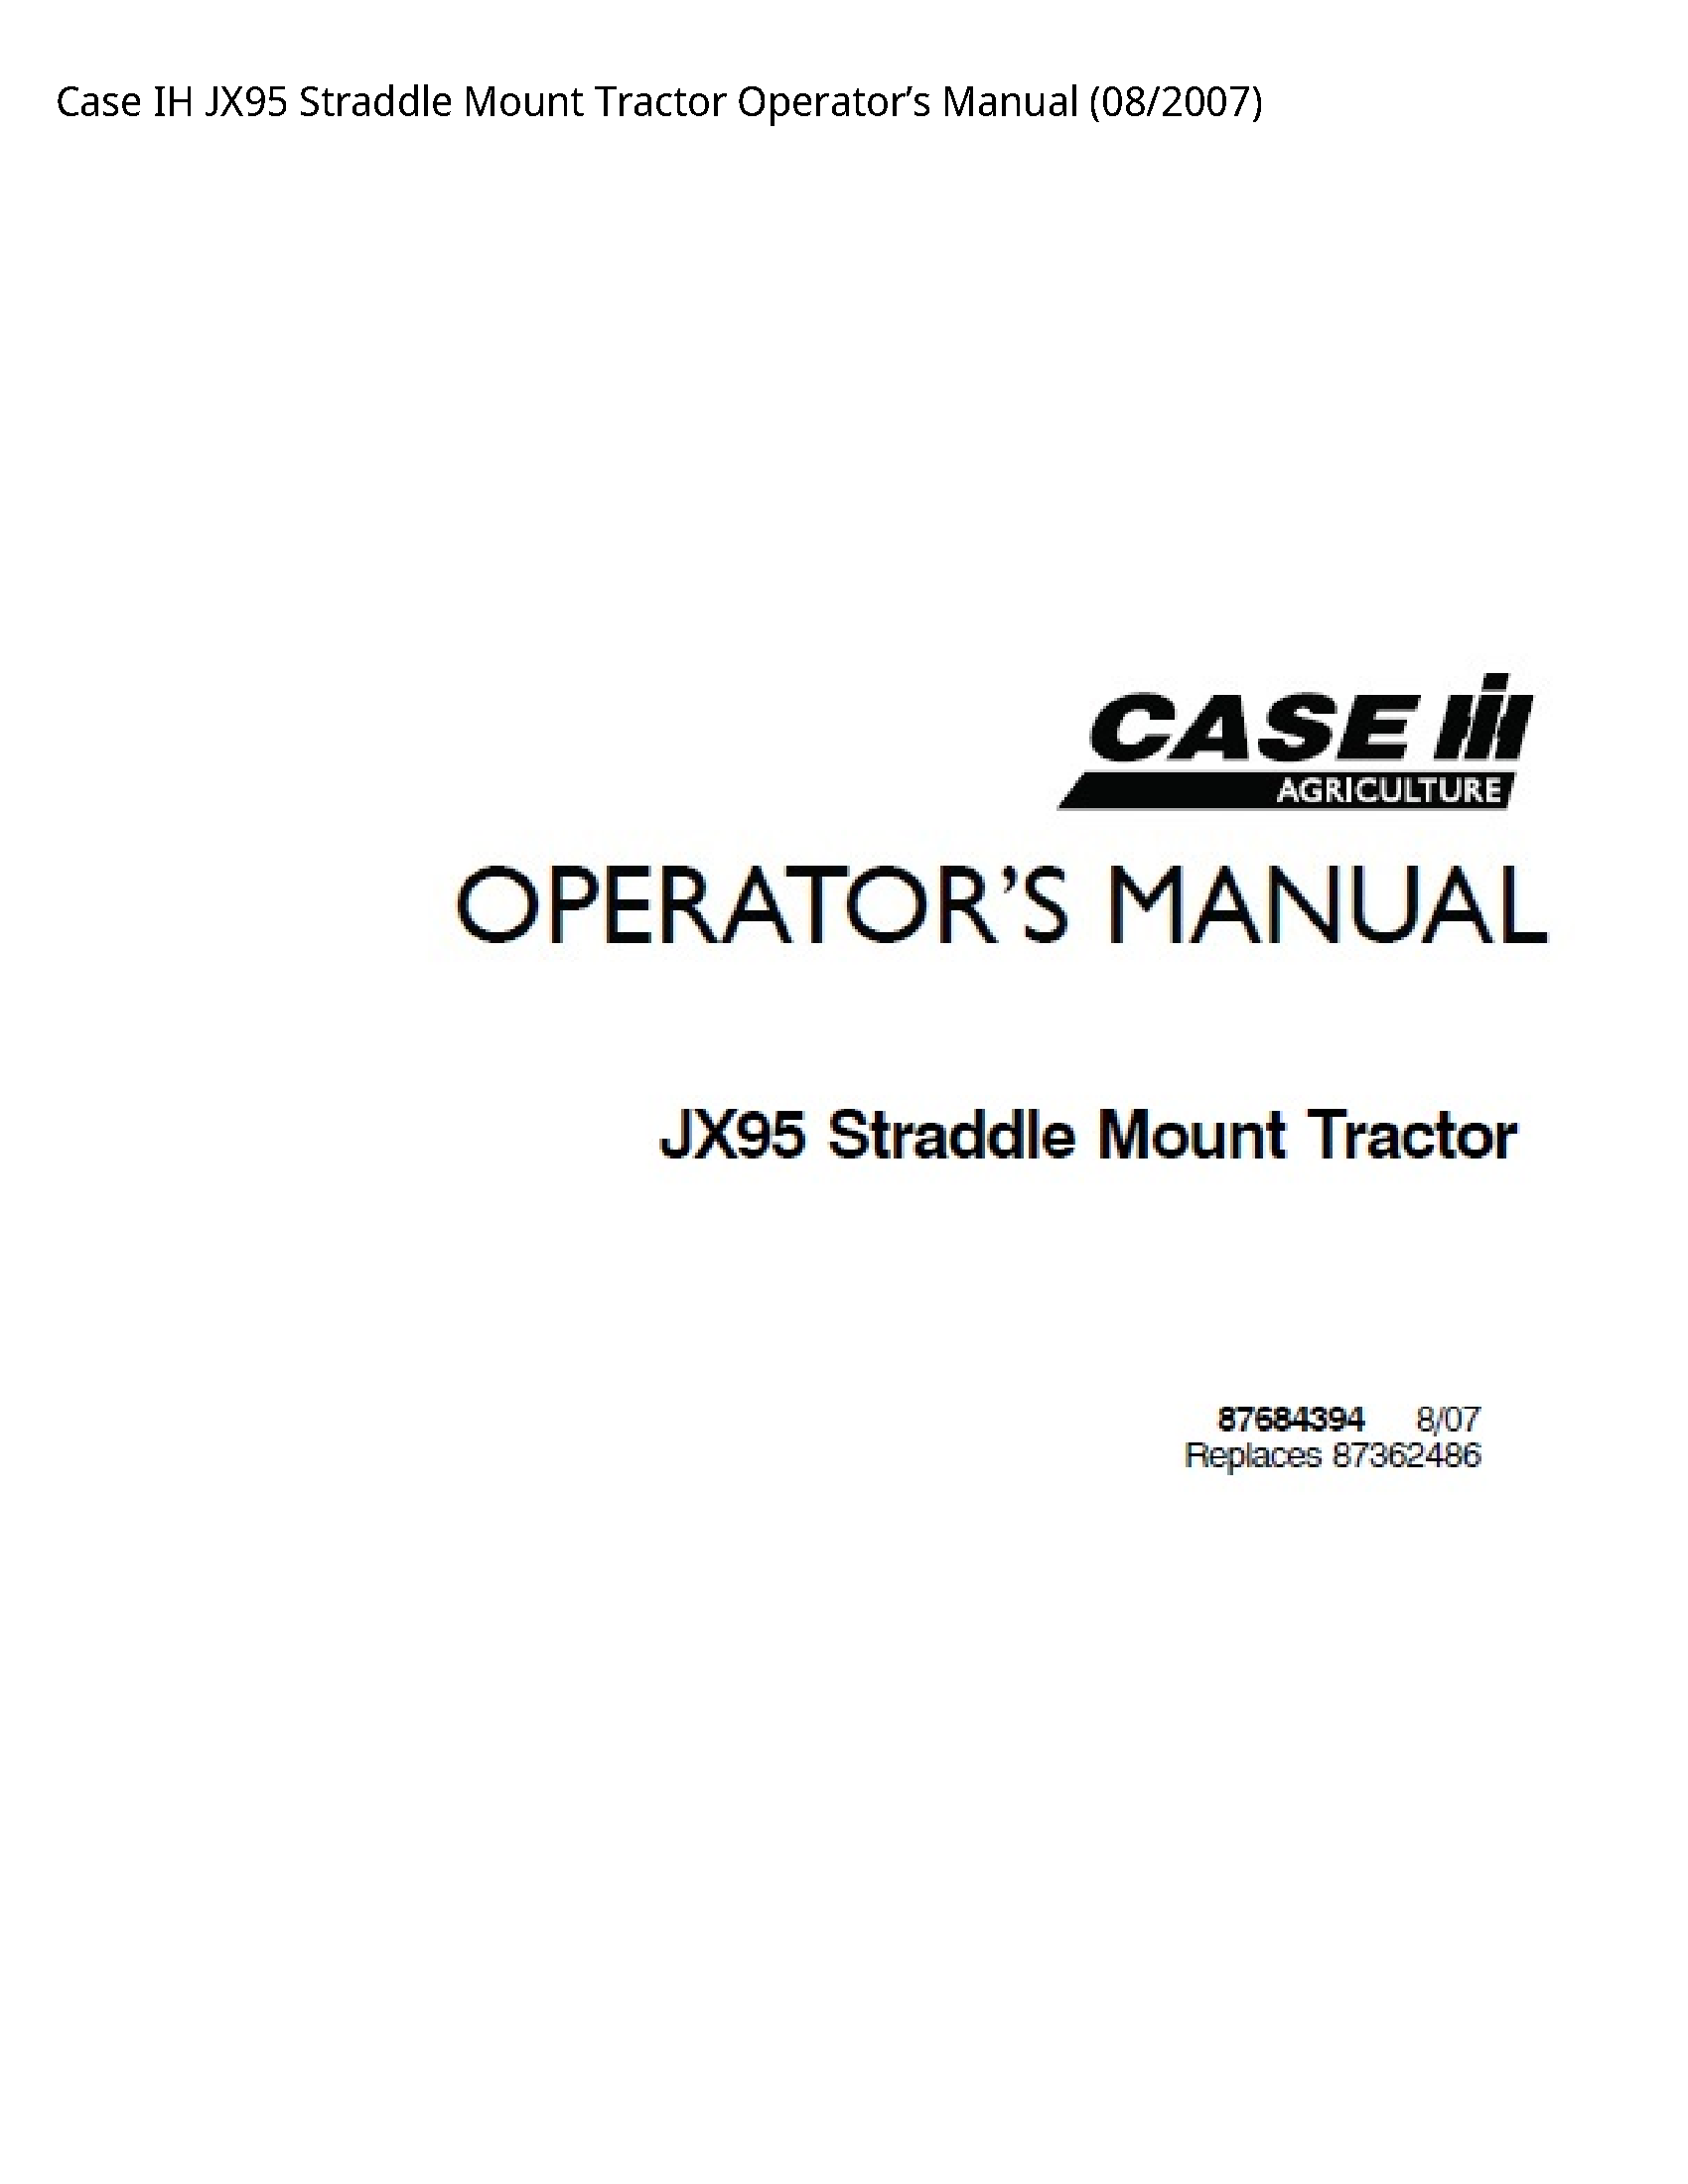 Case/Case IH JX95 IH Straddle Mount Tractor Operator’s manual